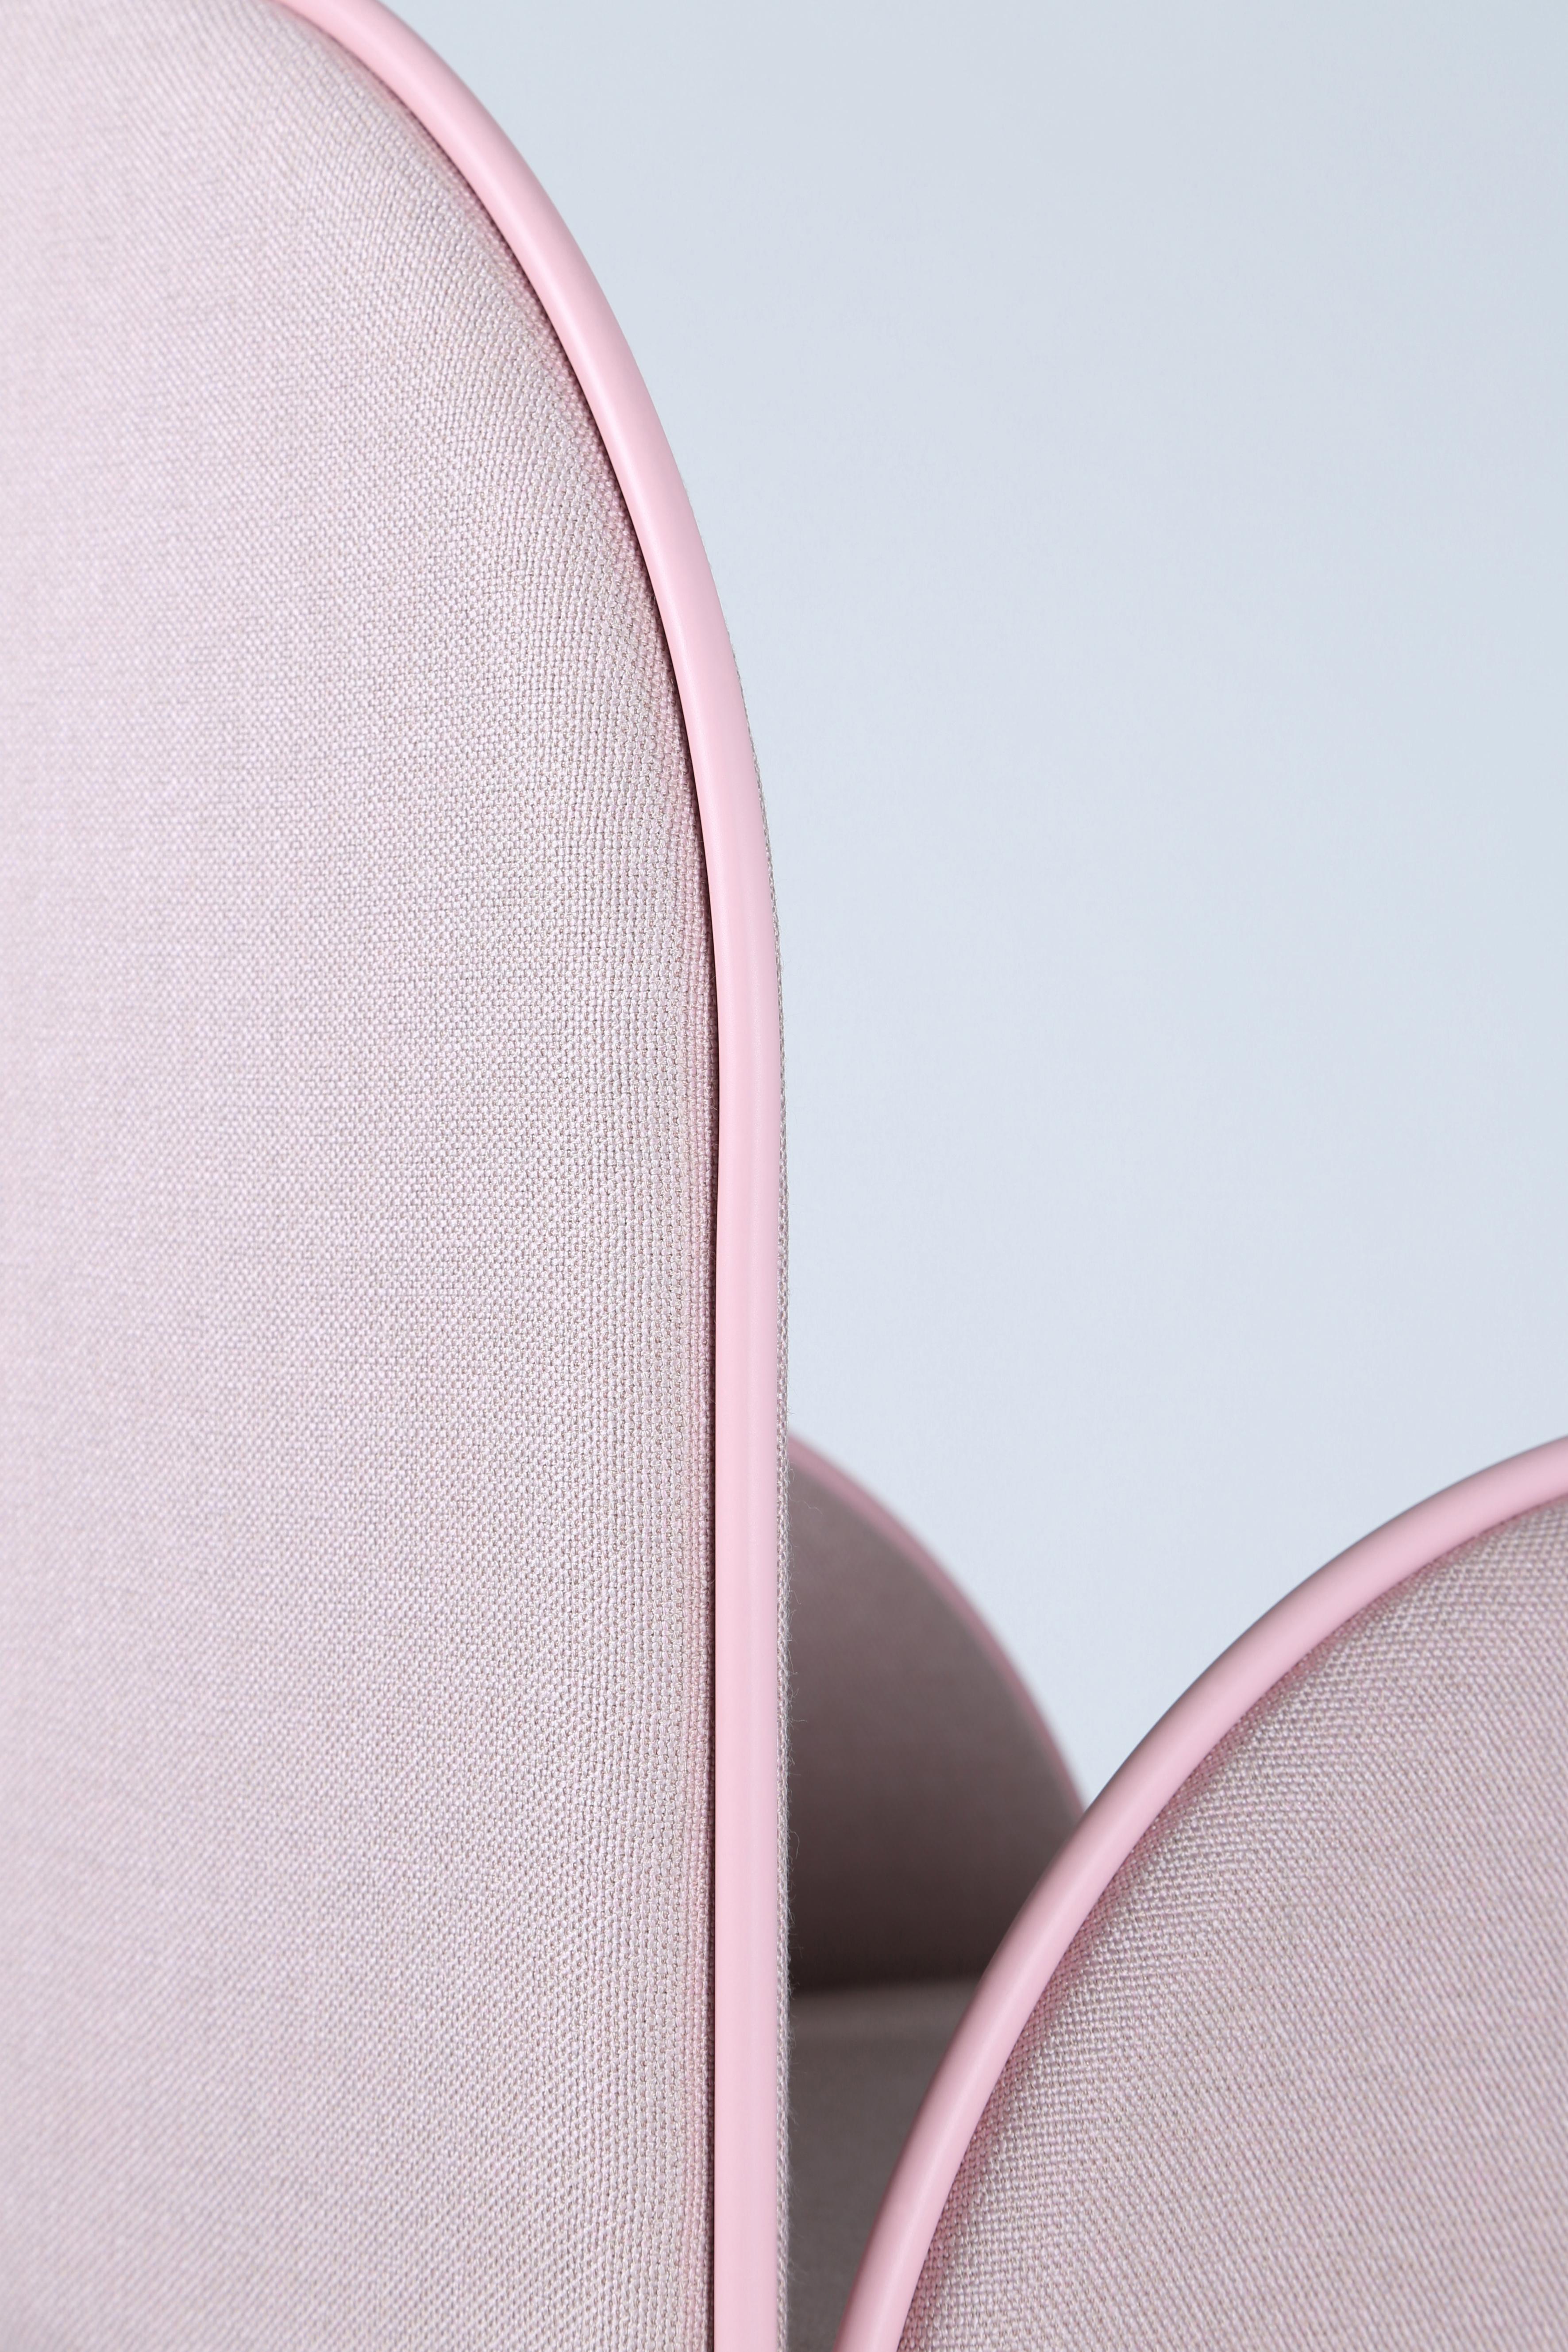 Lebanese Hawa Beirut Pink Chair by Richard Yasmine For Sale